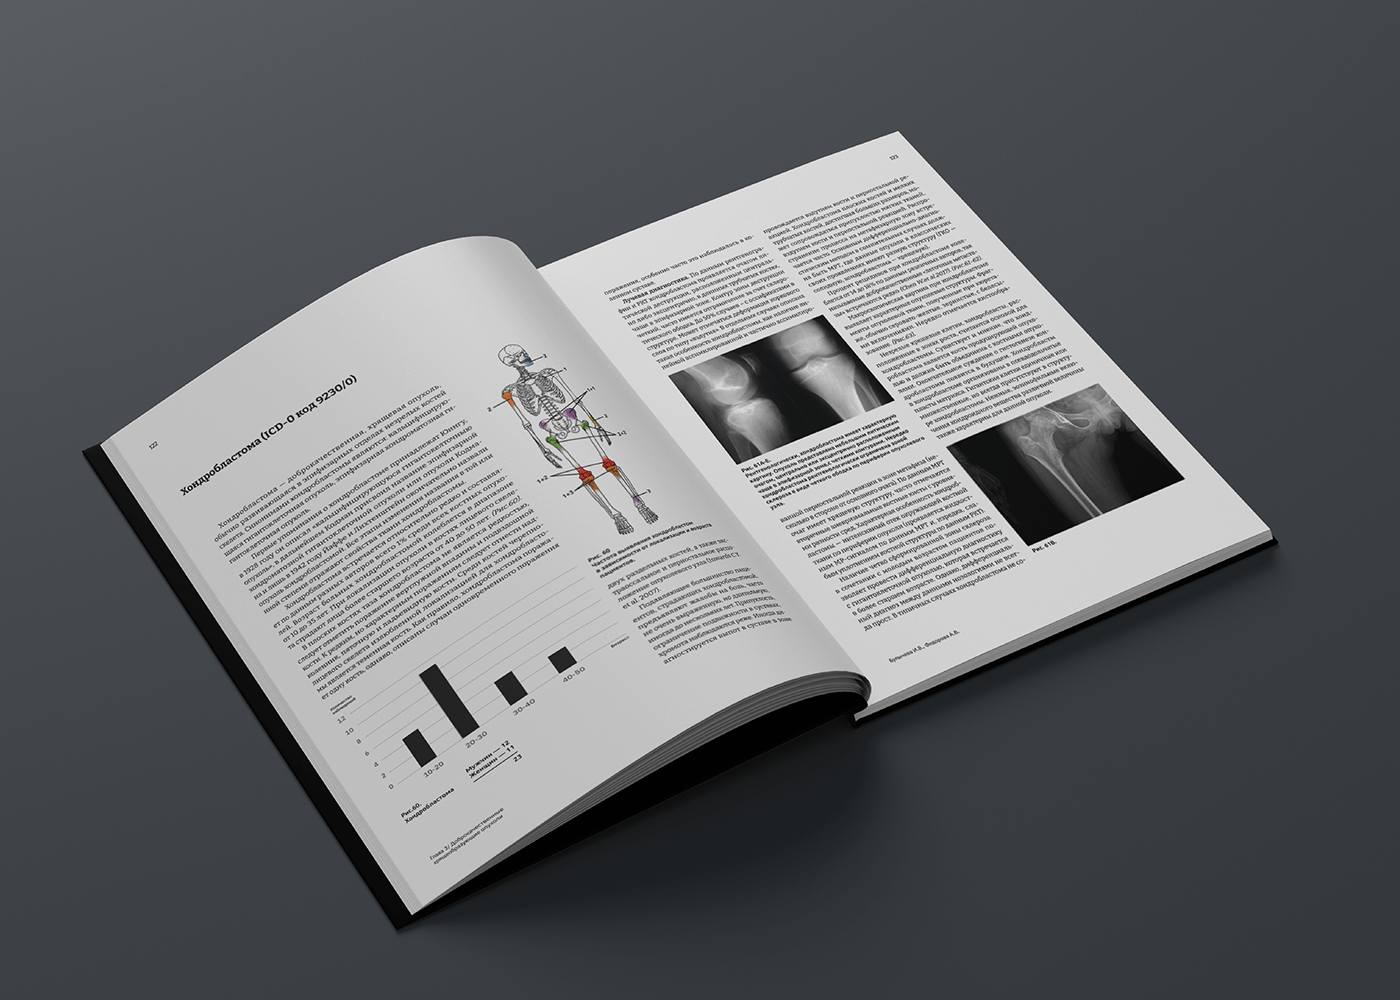 atlas book book design cover editorial Layout medicine pathology